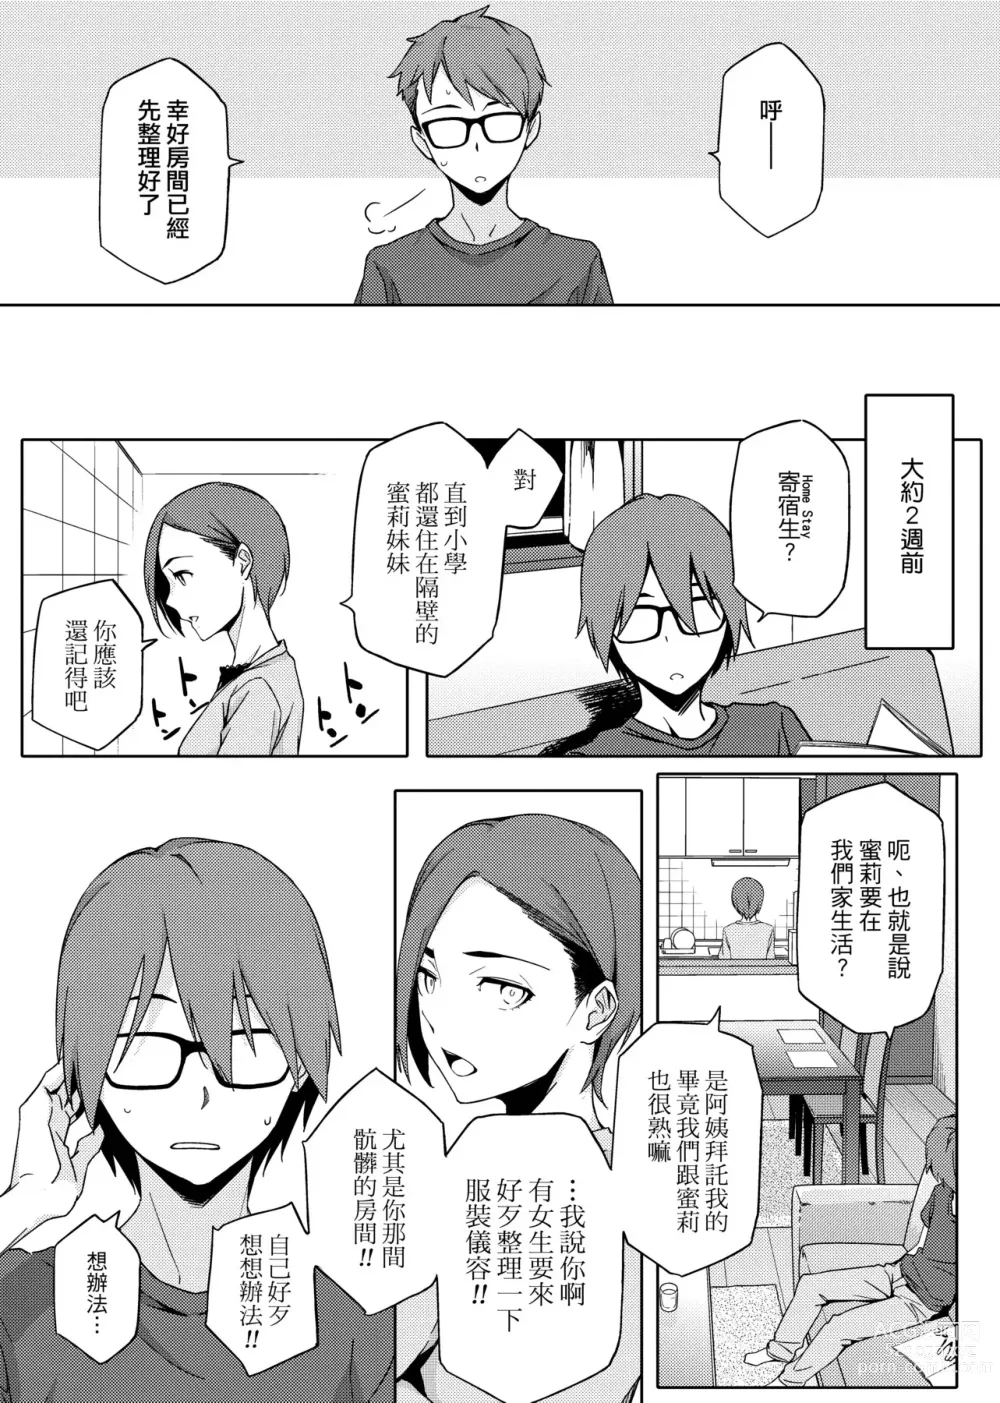 Page 9 of manga Natsu Koi Ota Girl - What Brings You to Japan?